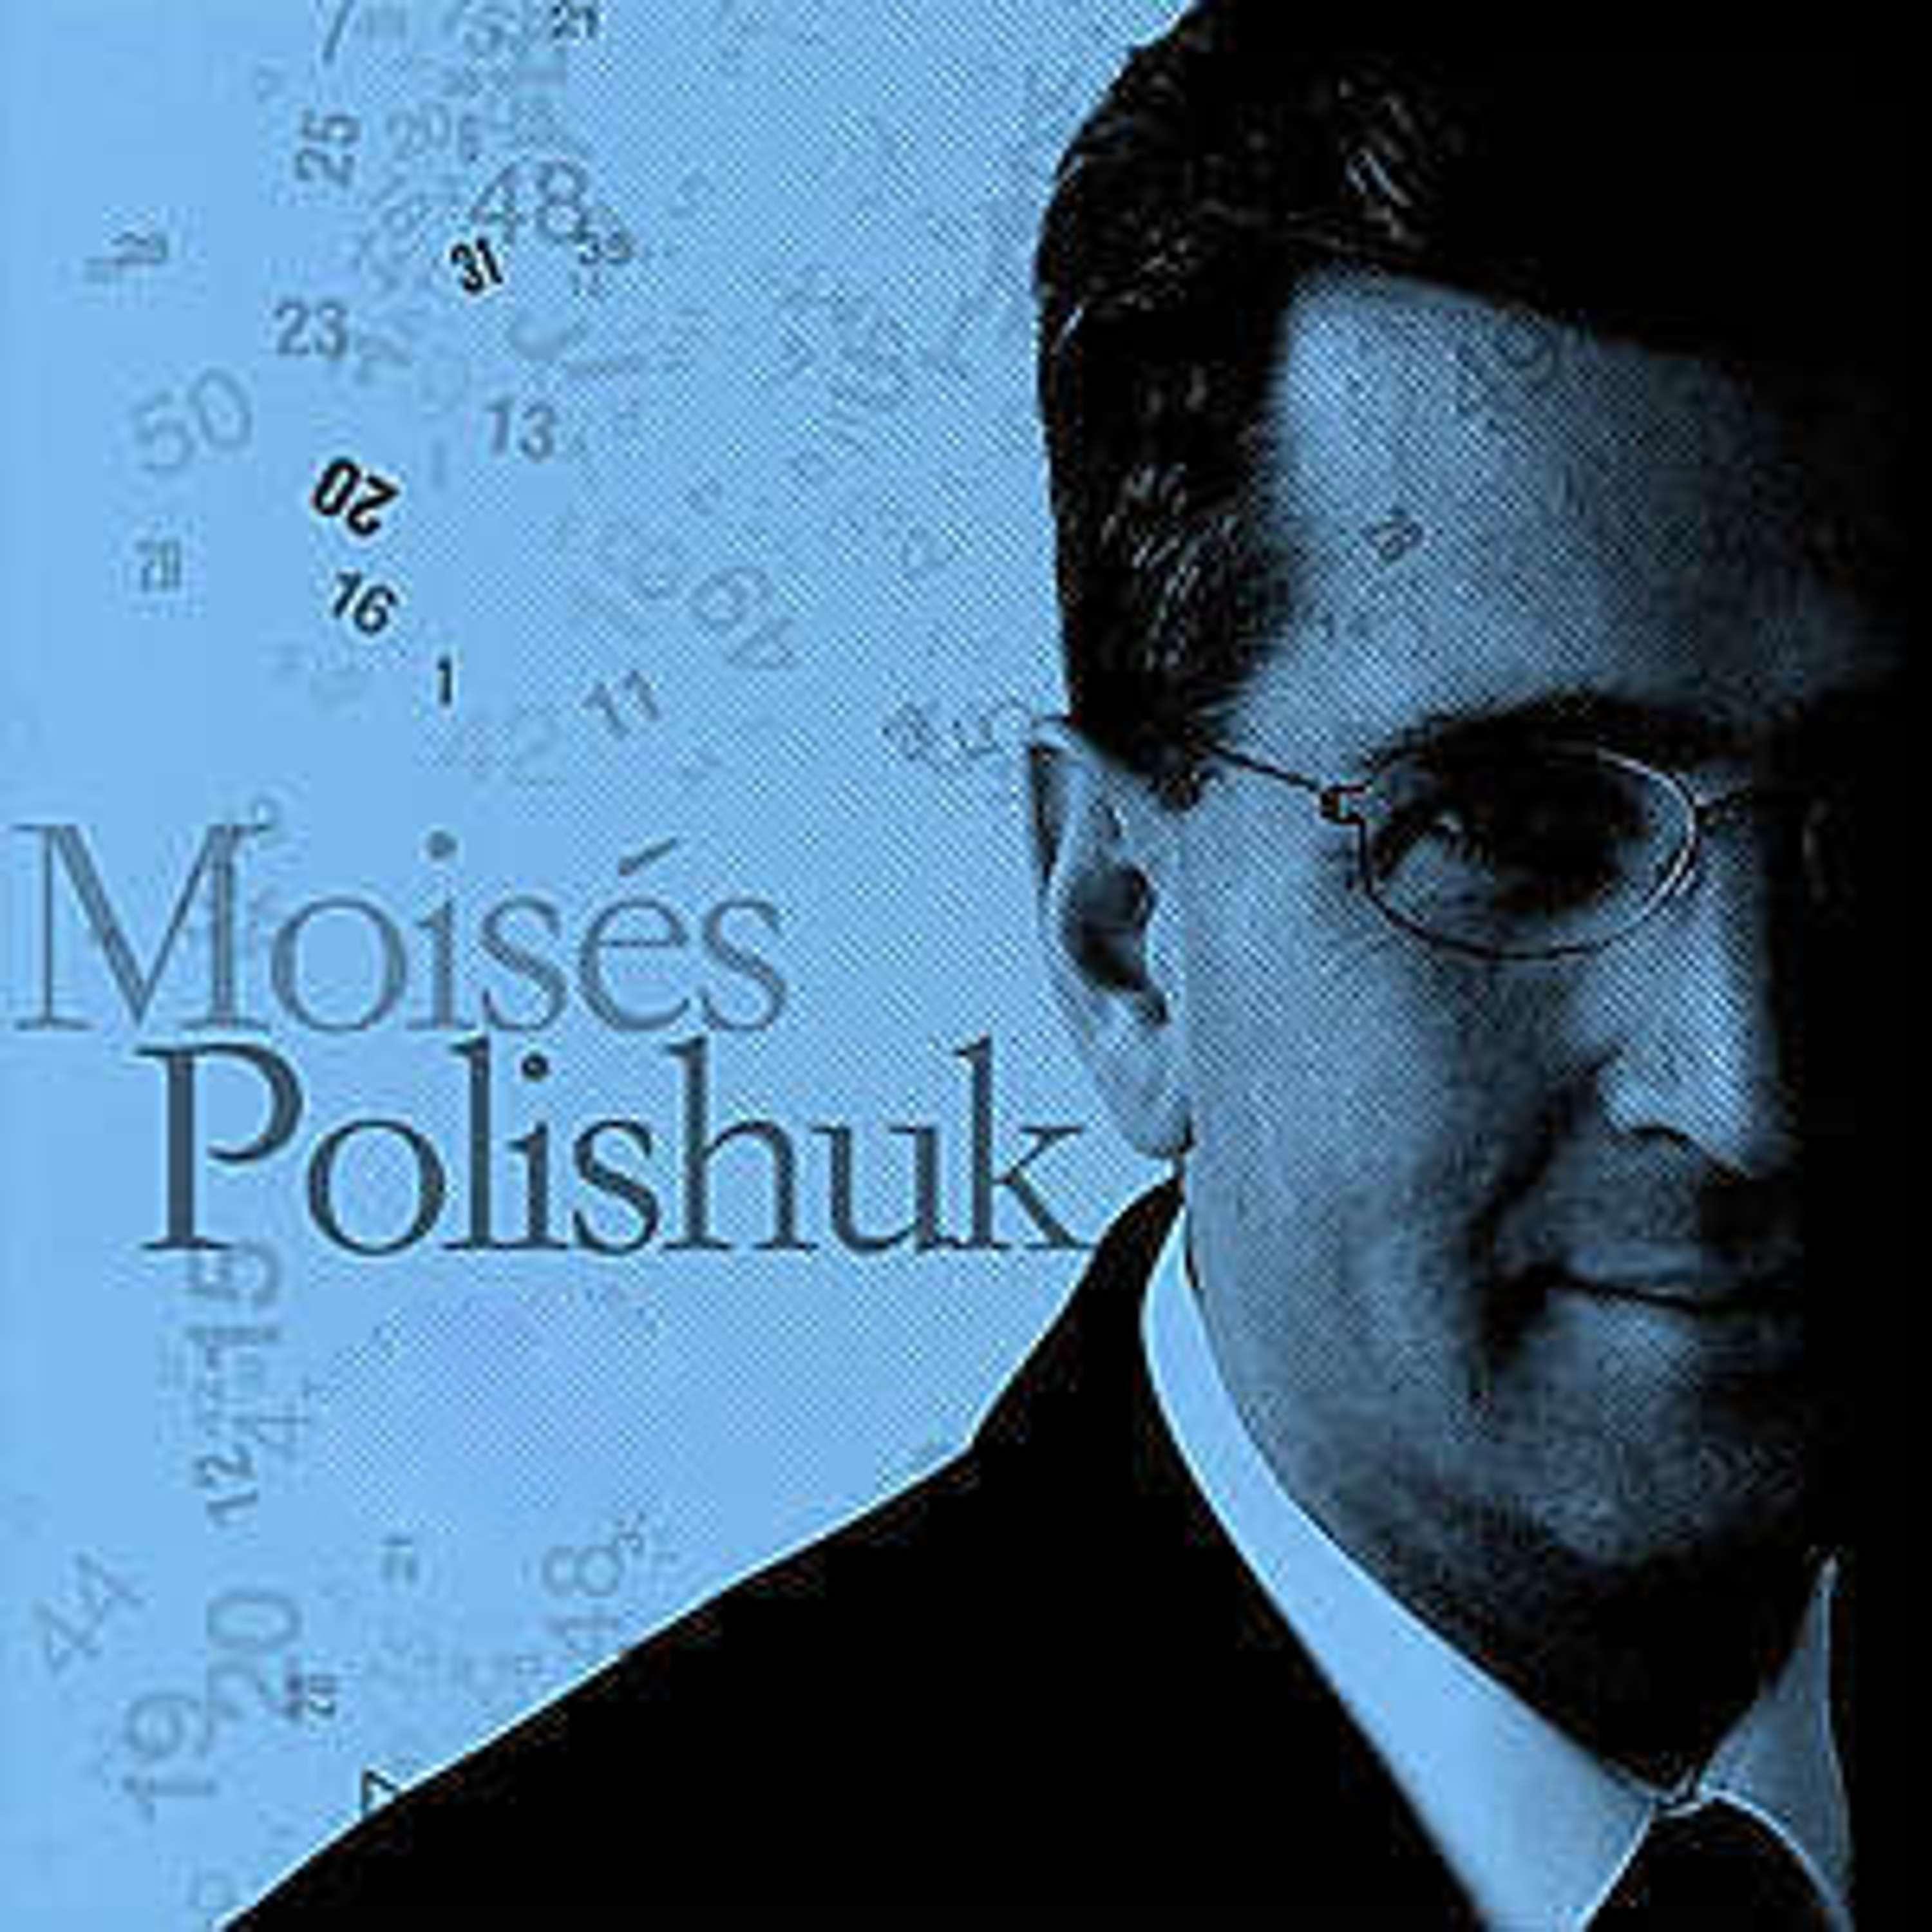 Show poster of Moisés Polishuk